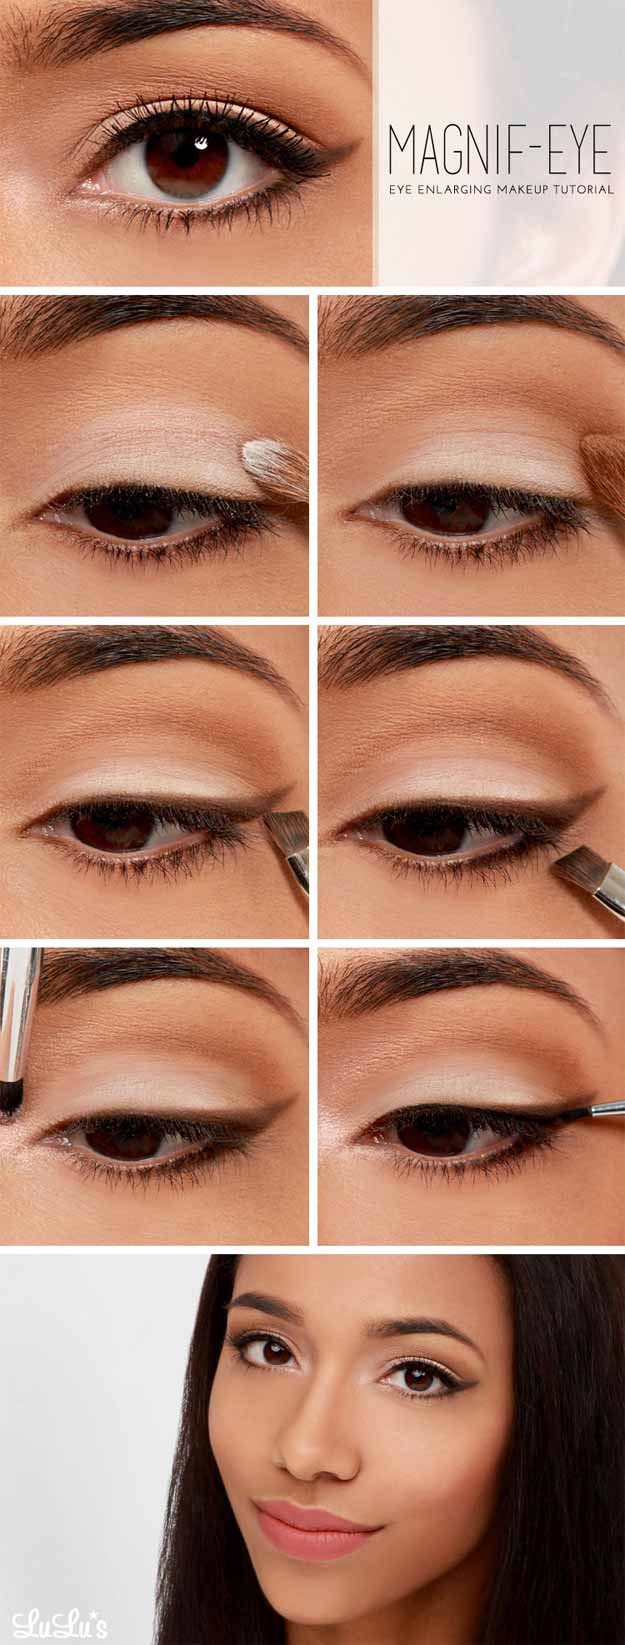 Eye Makeup Tips For Brown Eyes 30 Wedding Makeup For Brown Eyes The Goddess